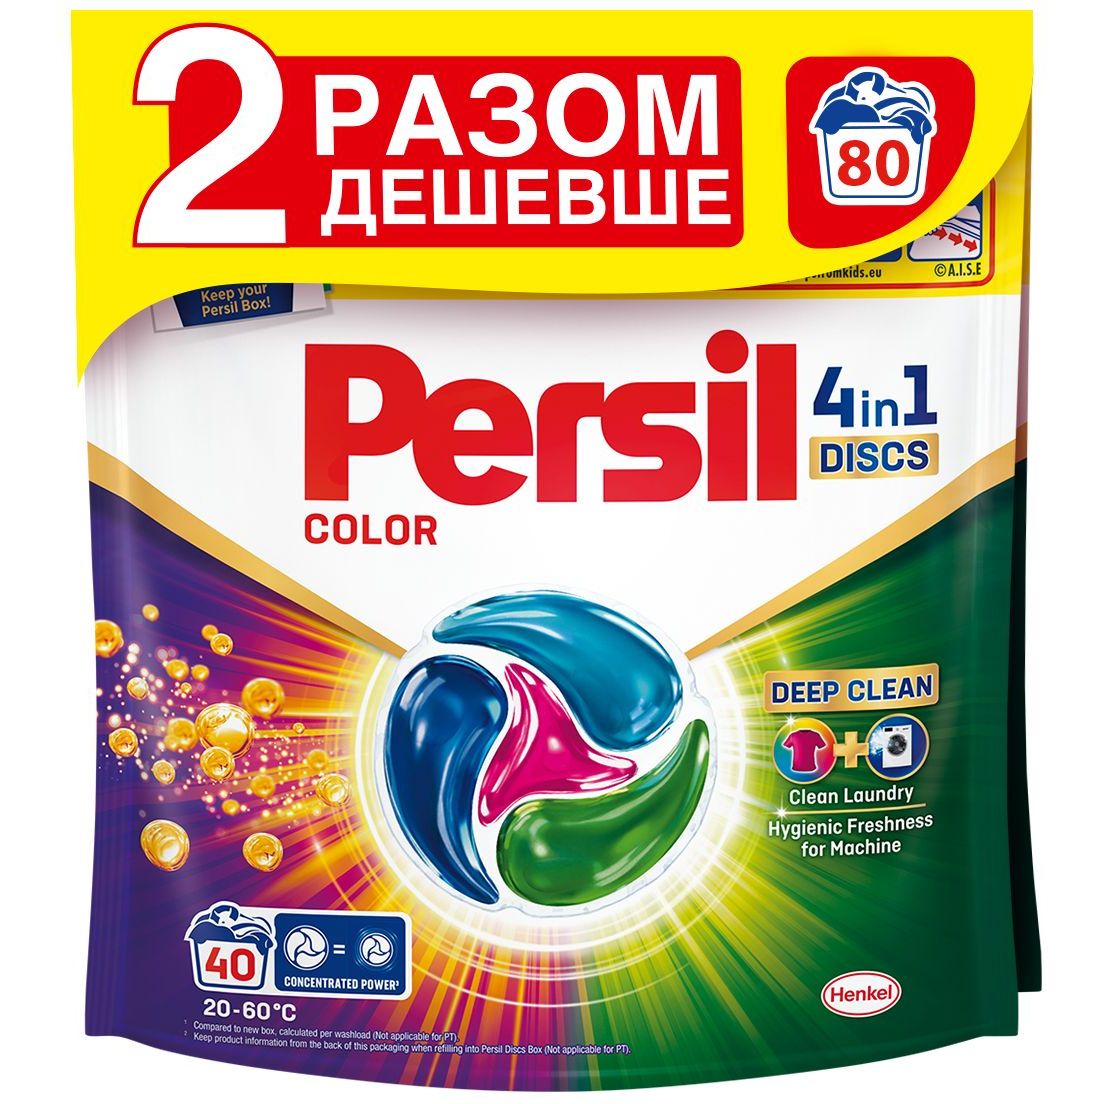 Диски для стирки Persil Deep Clean Color 4 in 1 Discs 80 шт. (2 х 40 шт.) - фото 1